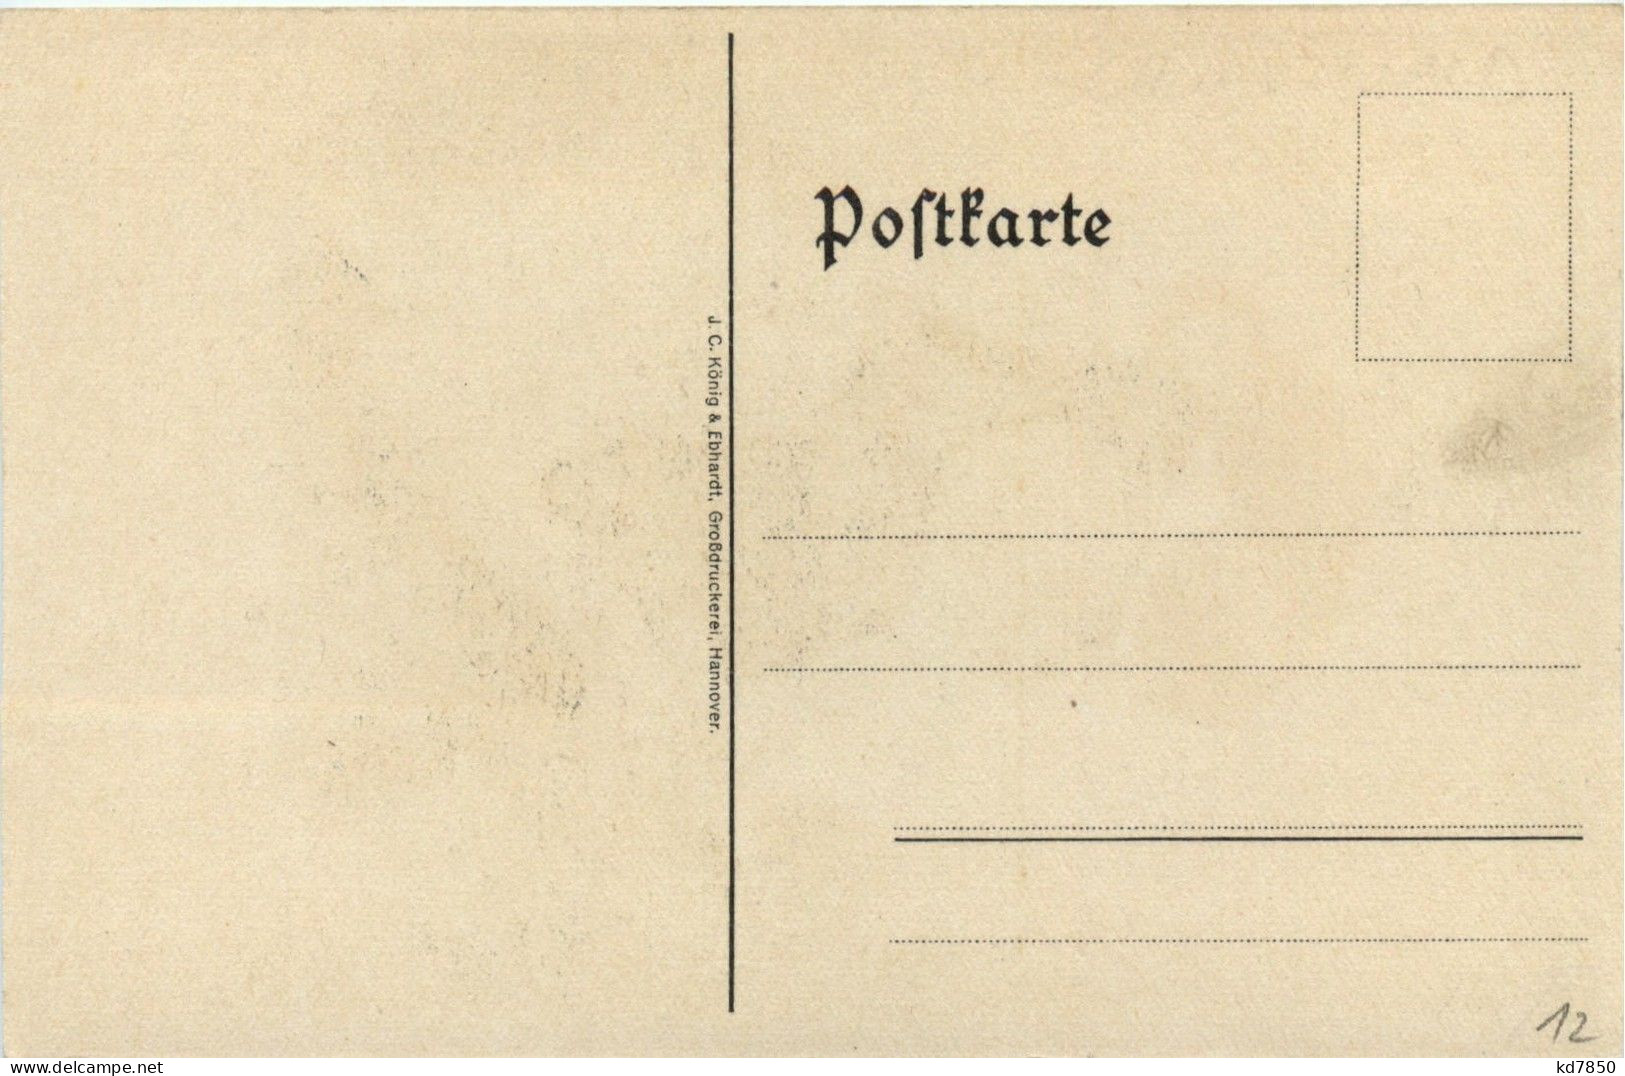 Gütermann Nähseide - Künstlerkarte C- Liebich - Advertising